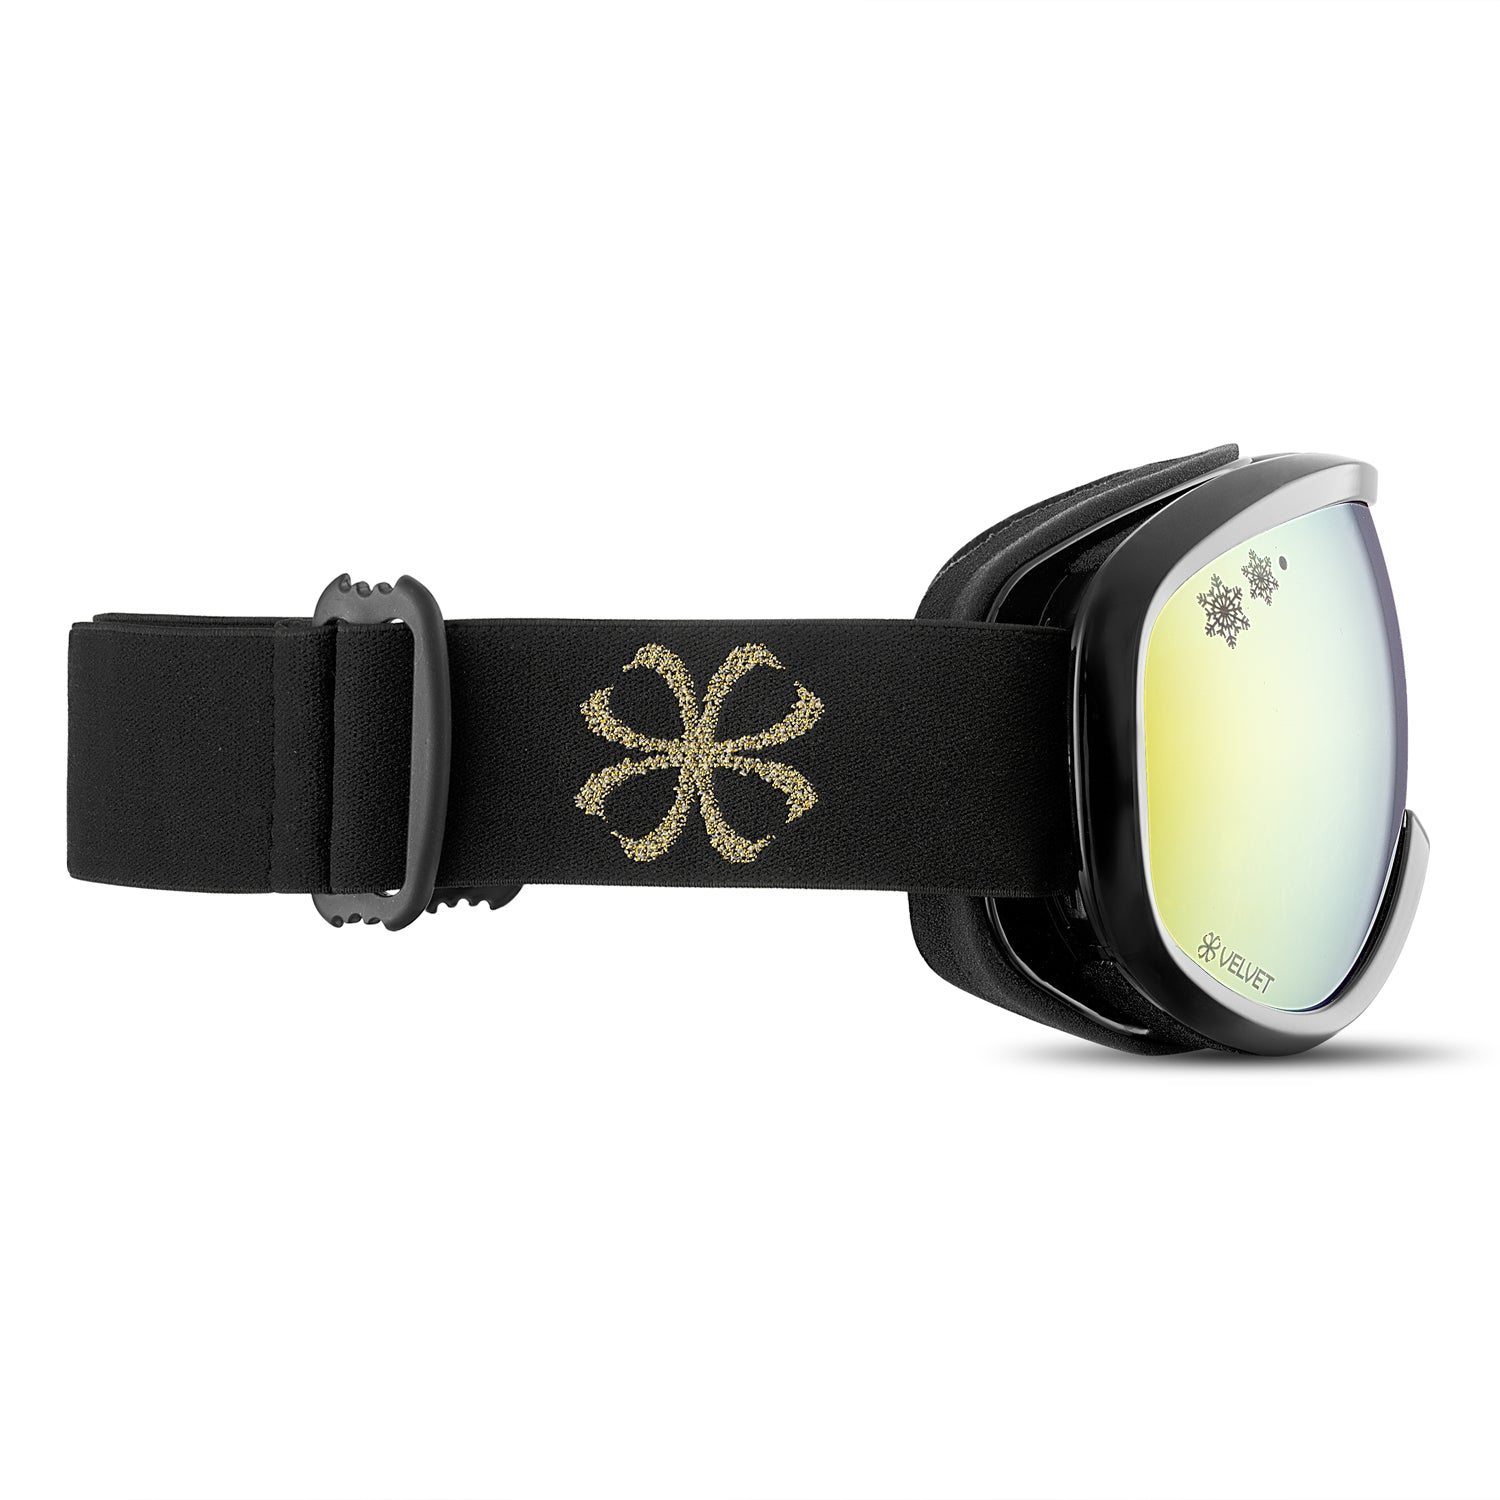 The "Flurry" Snow Goggle - Black - Velvet Eyewear